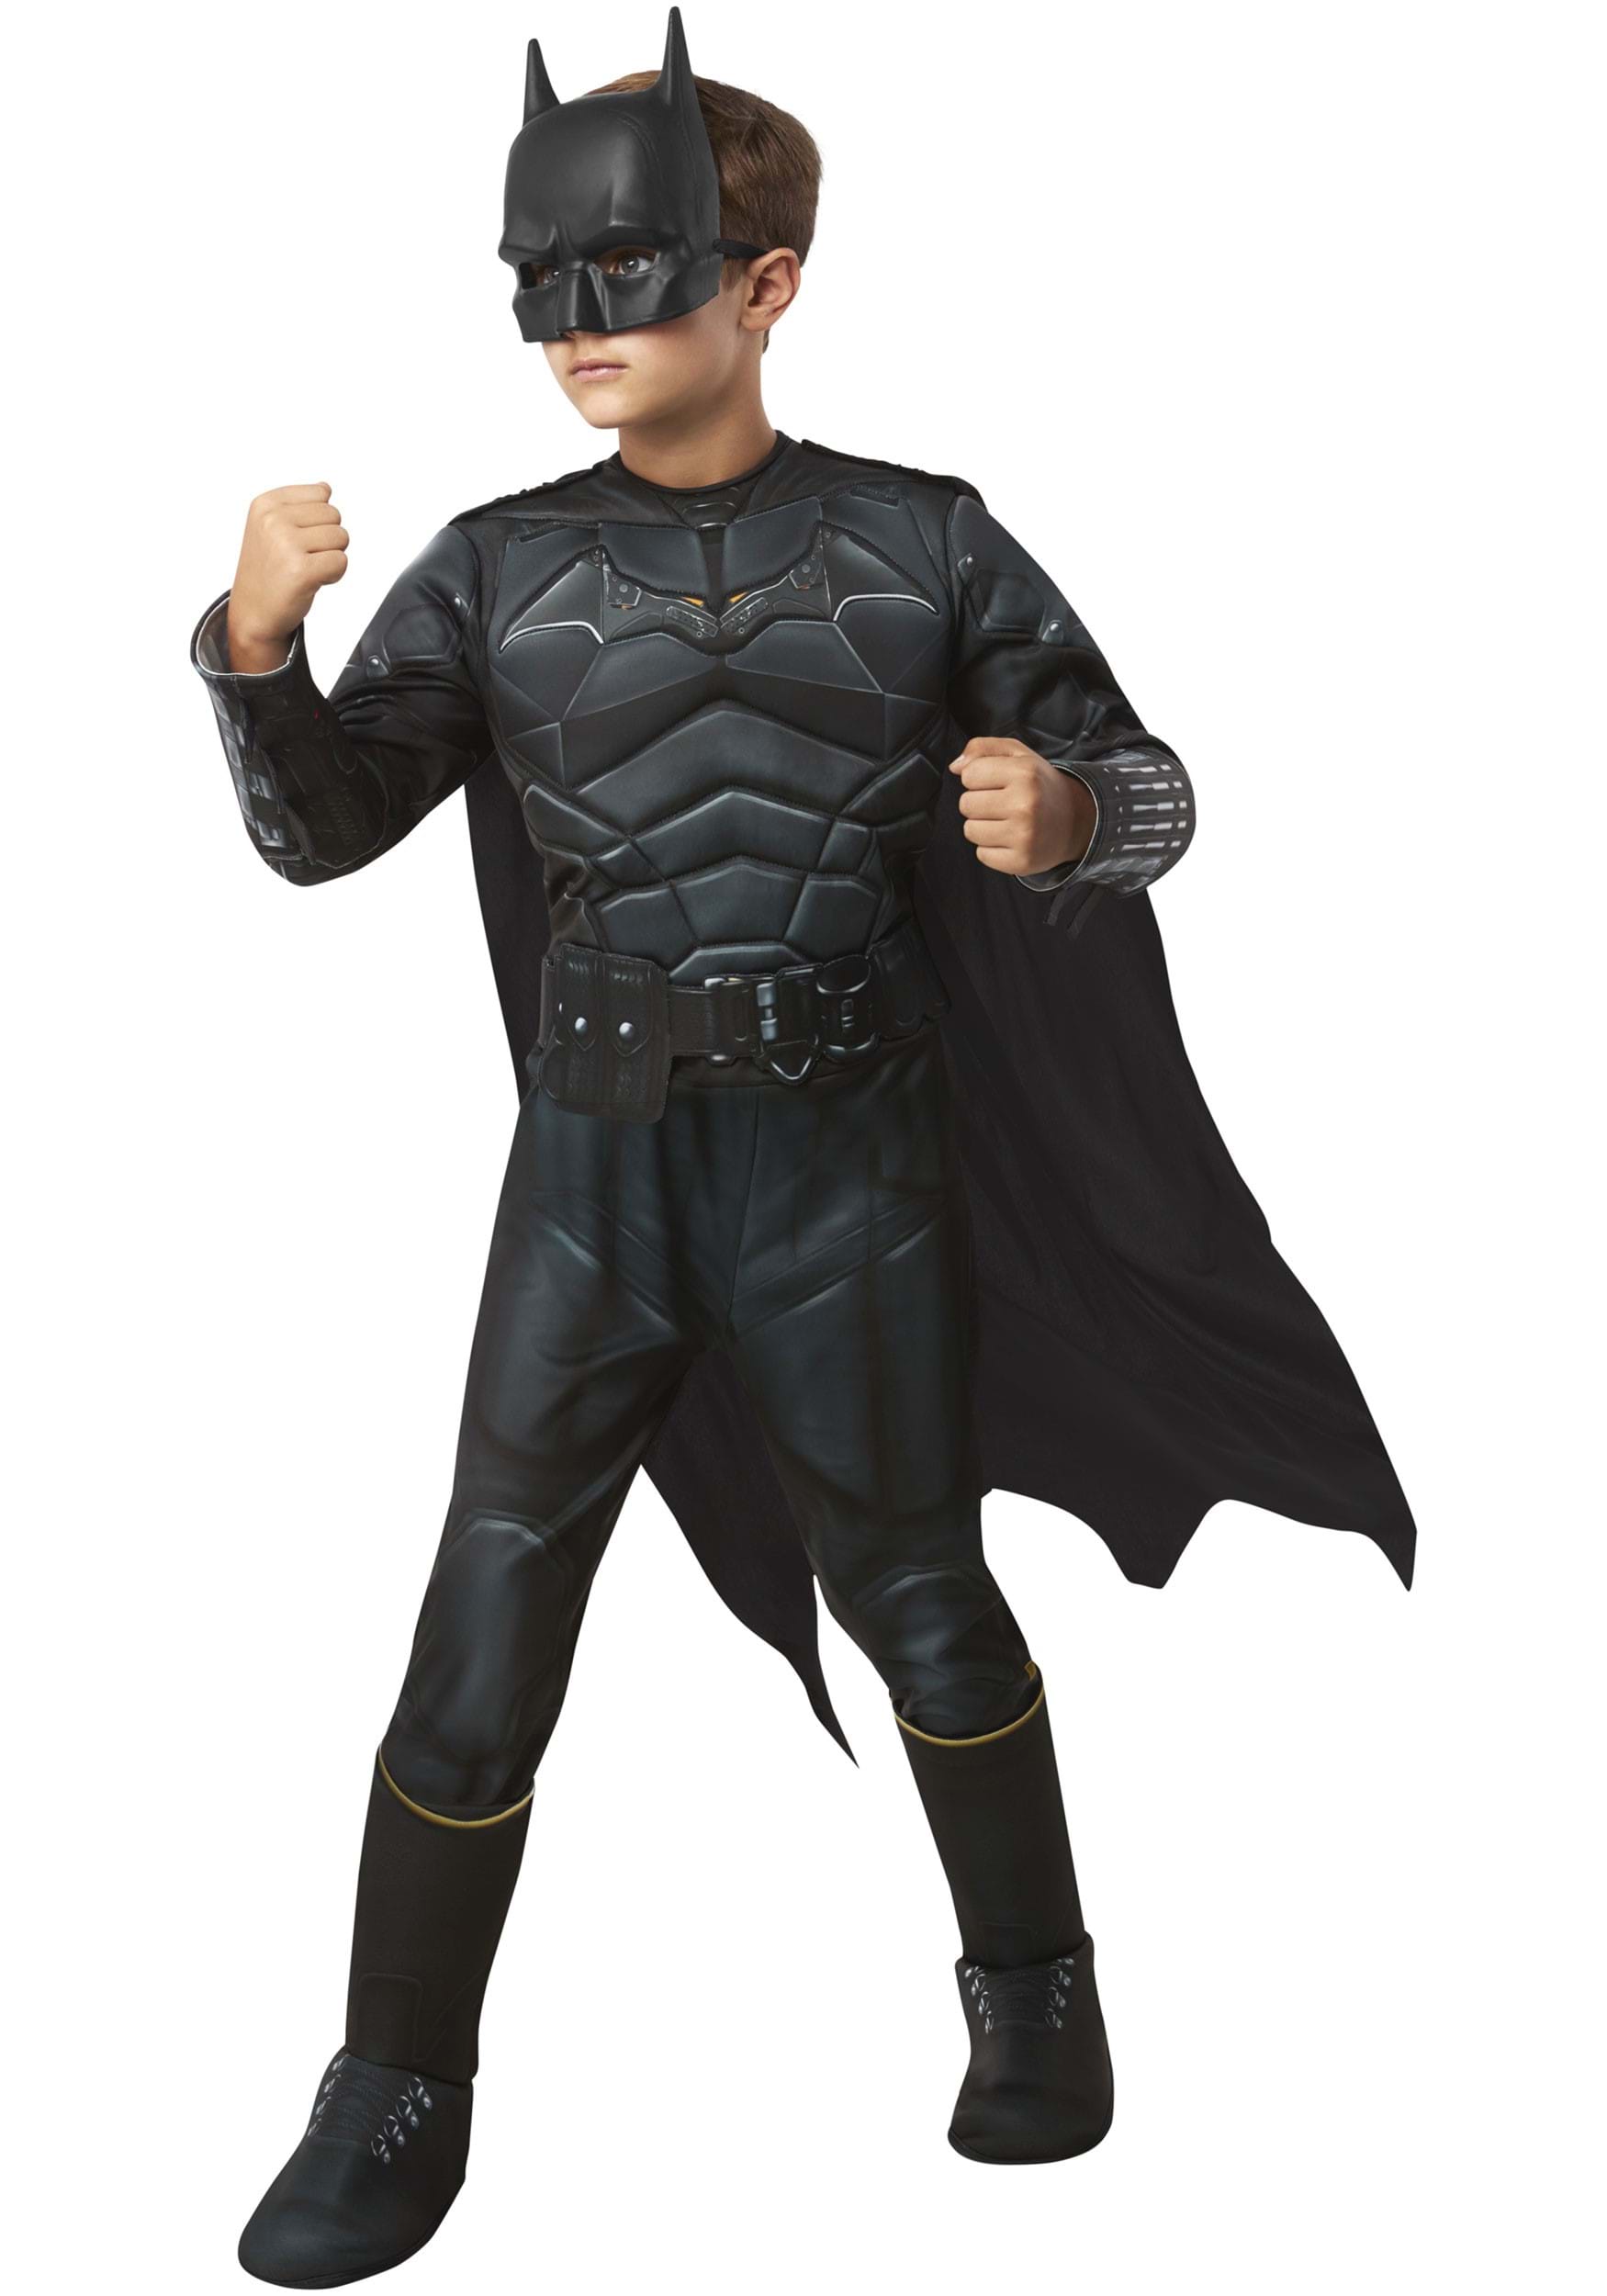 The Batman (2022) Boy’s Deluxe Batman Costume